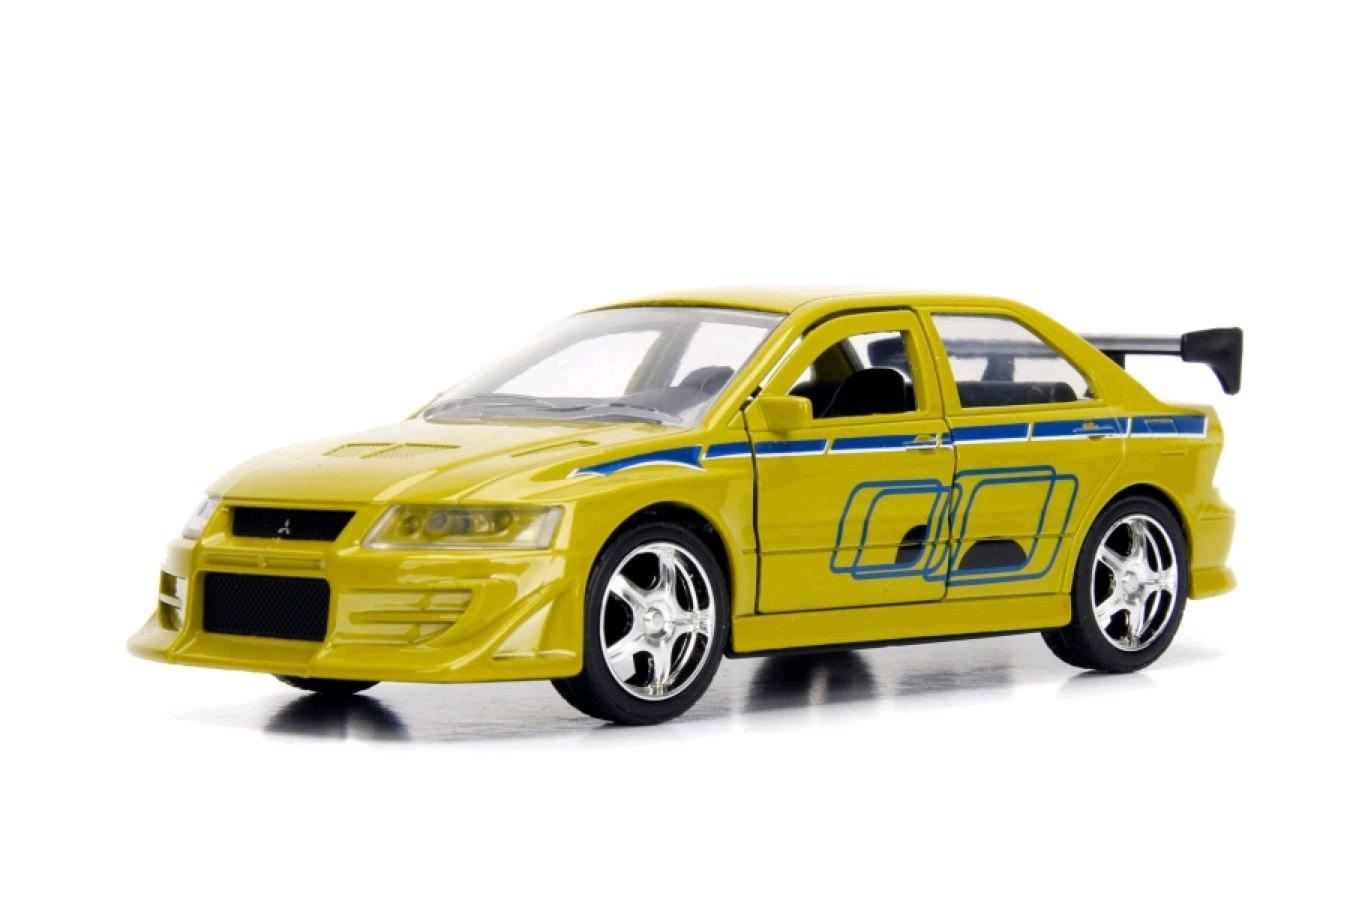 JAD99789 Fast and Furious - 2002 Mitsubishi Lancer EVO VII 1:32 Hollywood Ride - Jada Toys - Titan Pop Culture